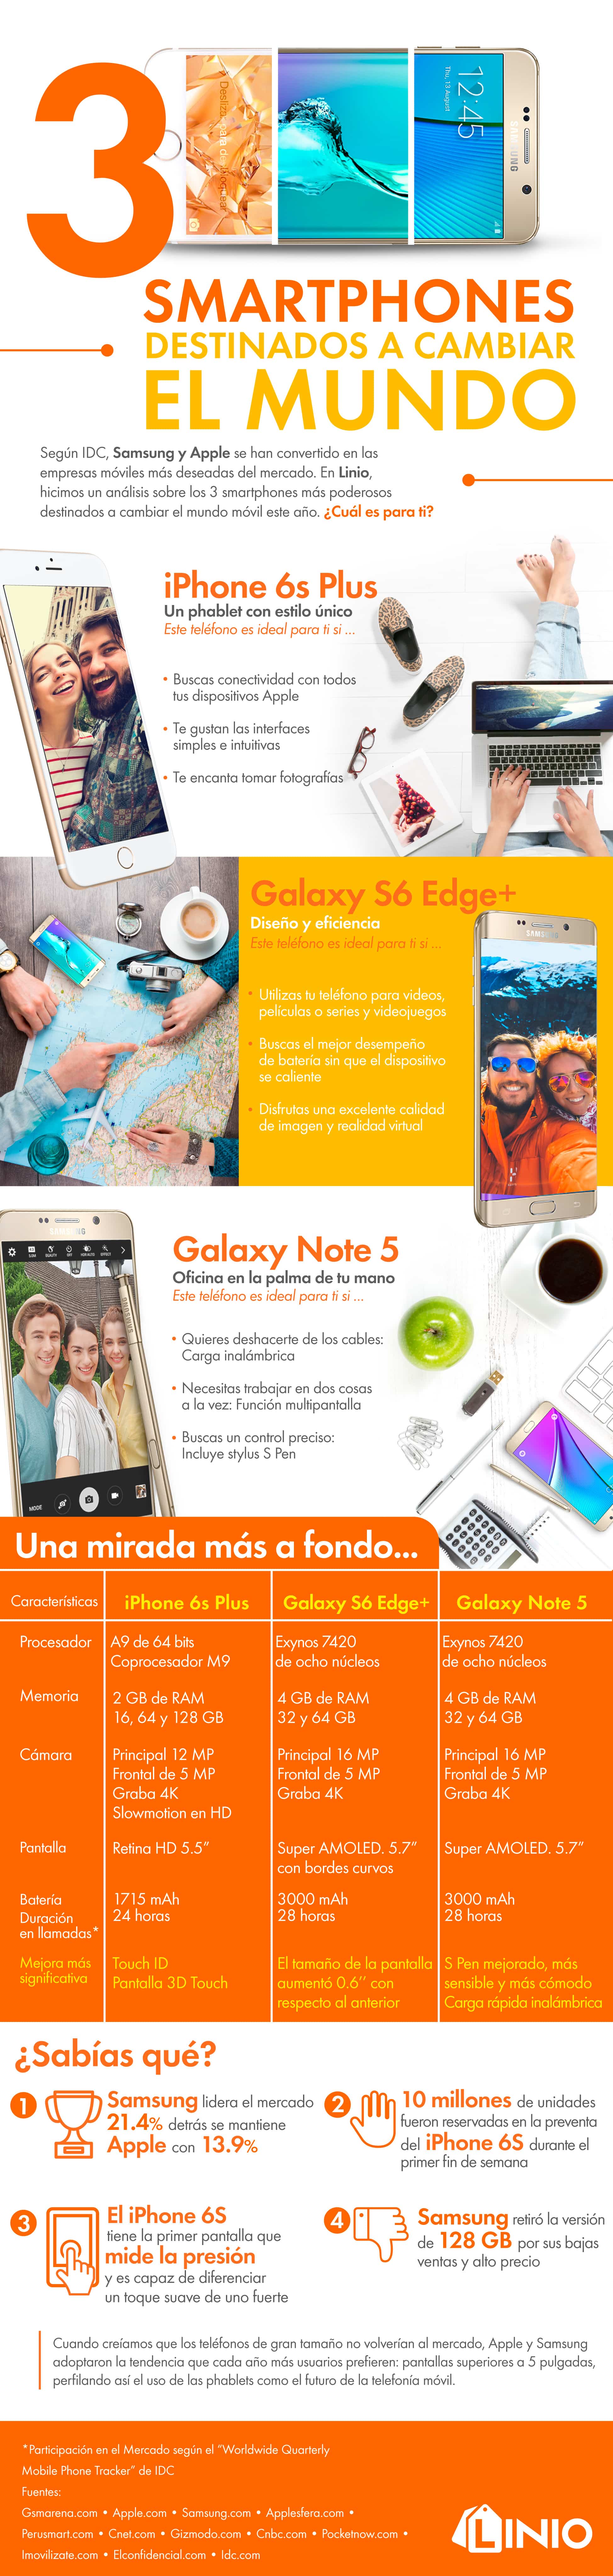 Infografia-smartphones_alta